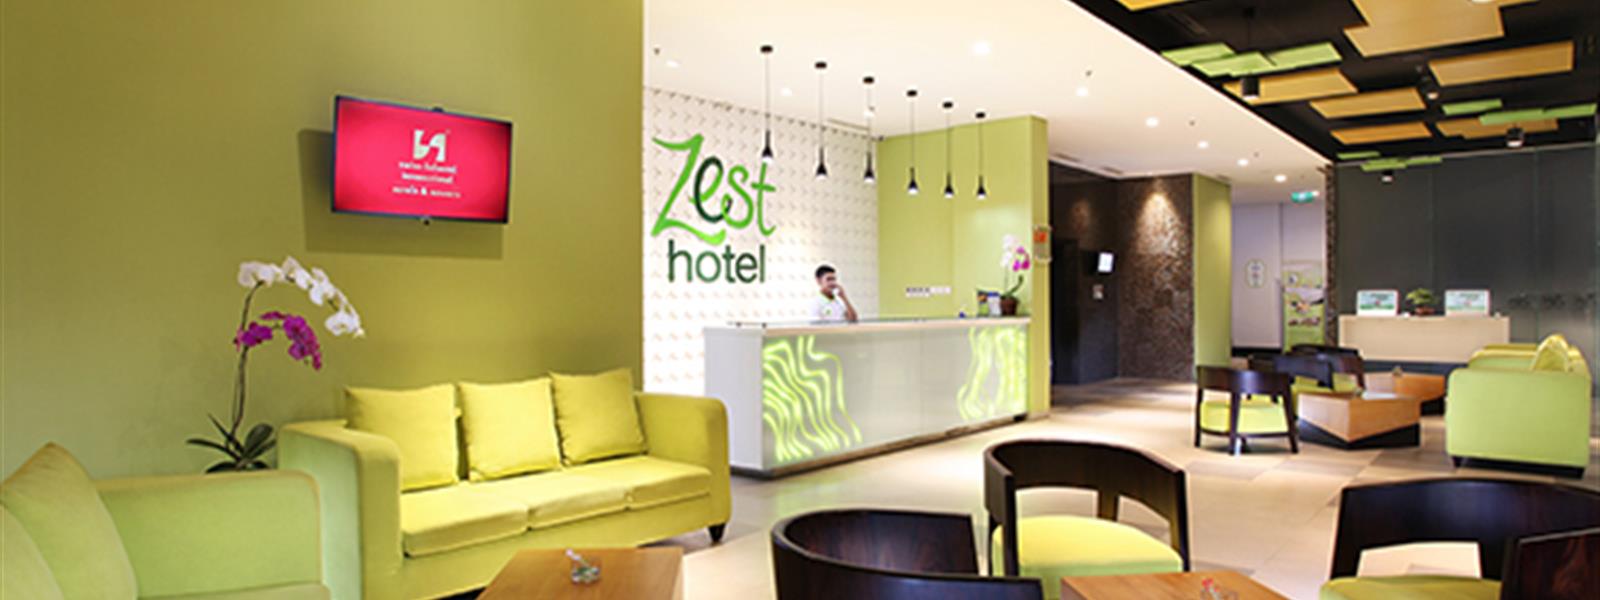 Zest Hotel